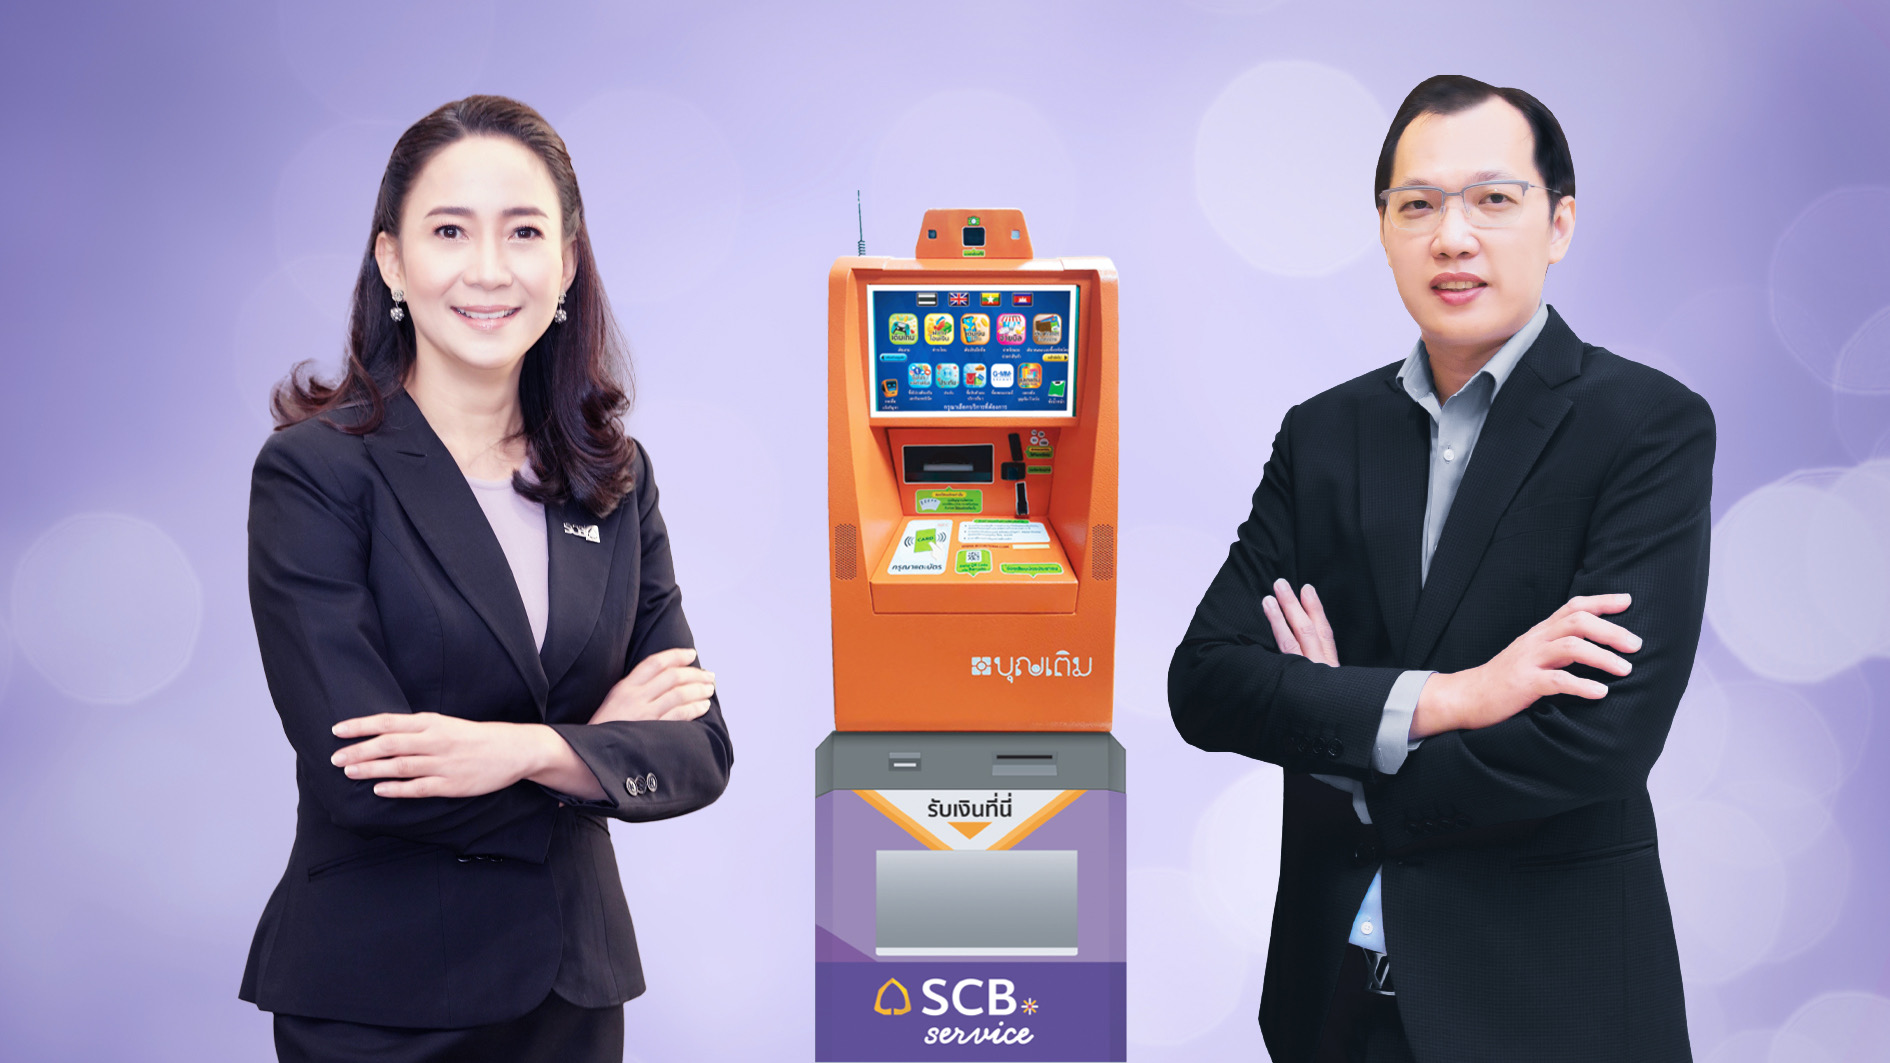 FSMART ผนึกSCB เปิดบริการถอนเงินผ่าน“บุญเติม Mini ATM”ให้บริการ 24 ชั่วโมง